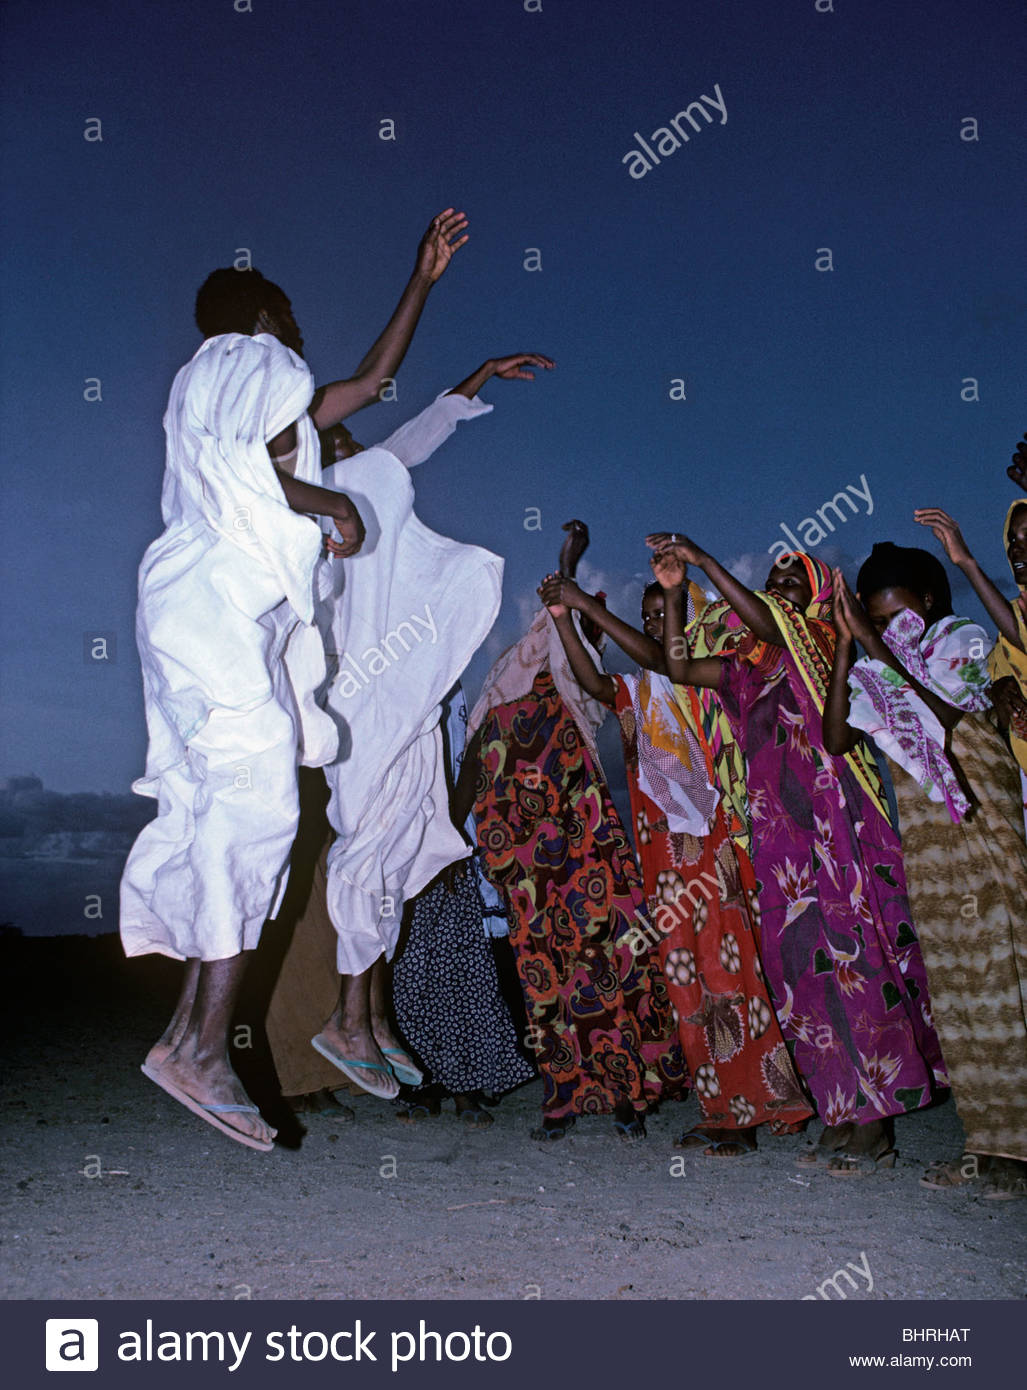 dancing-somali-nomads-BHRHAT.jpg